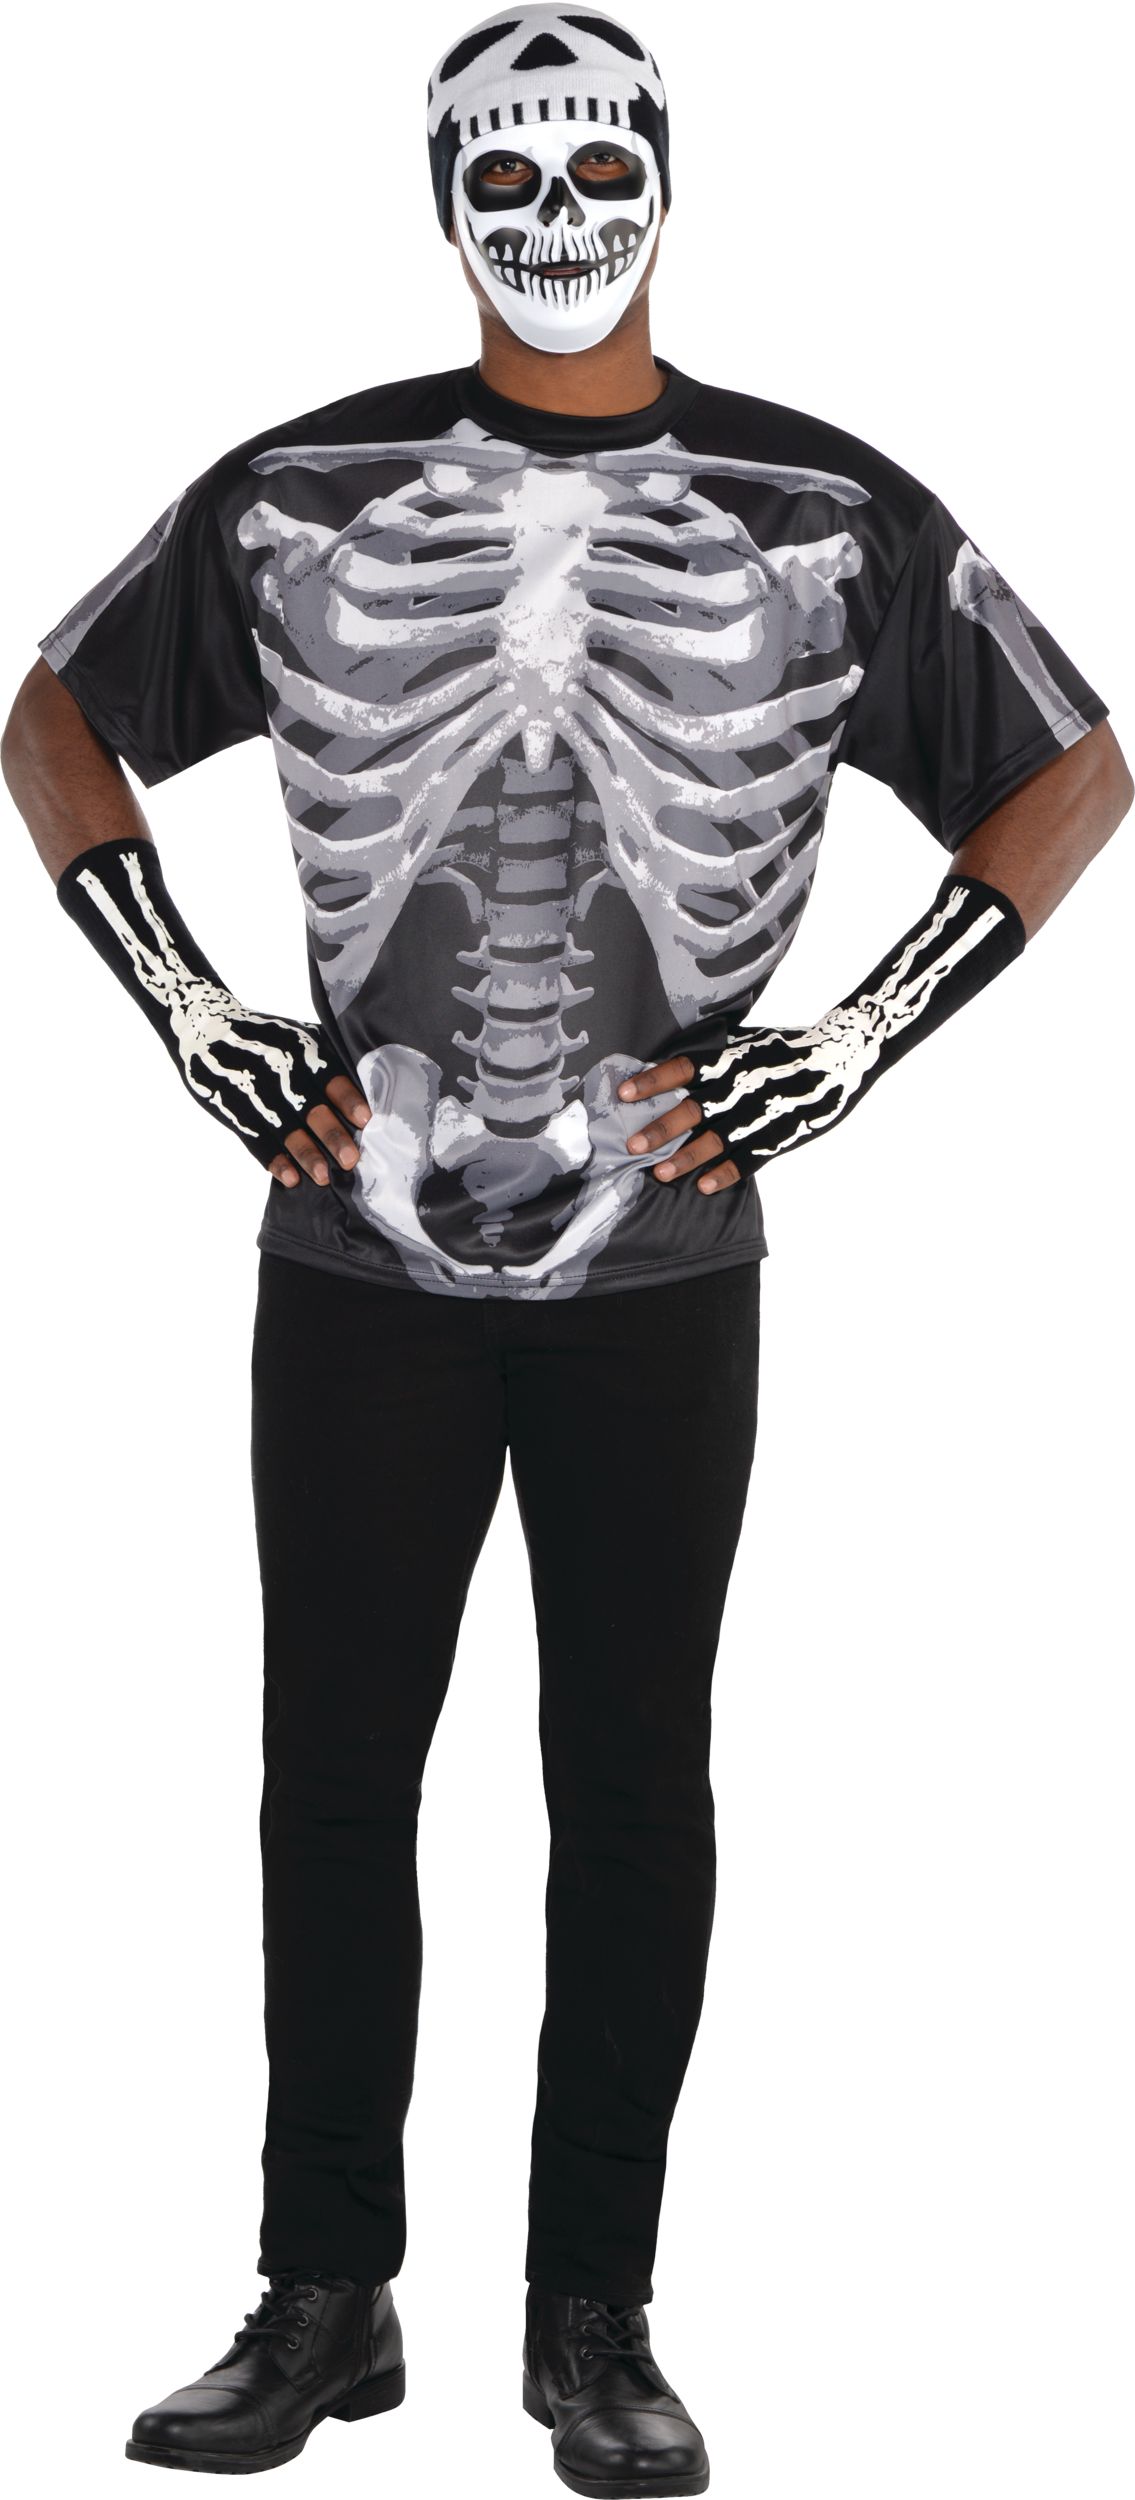 Skeleton bra t-shirt